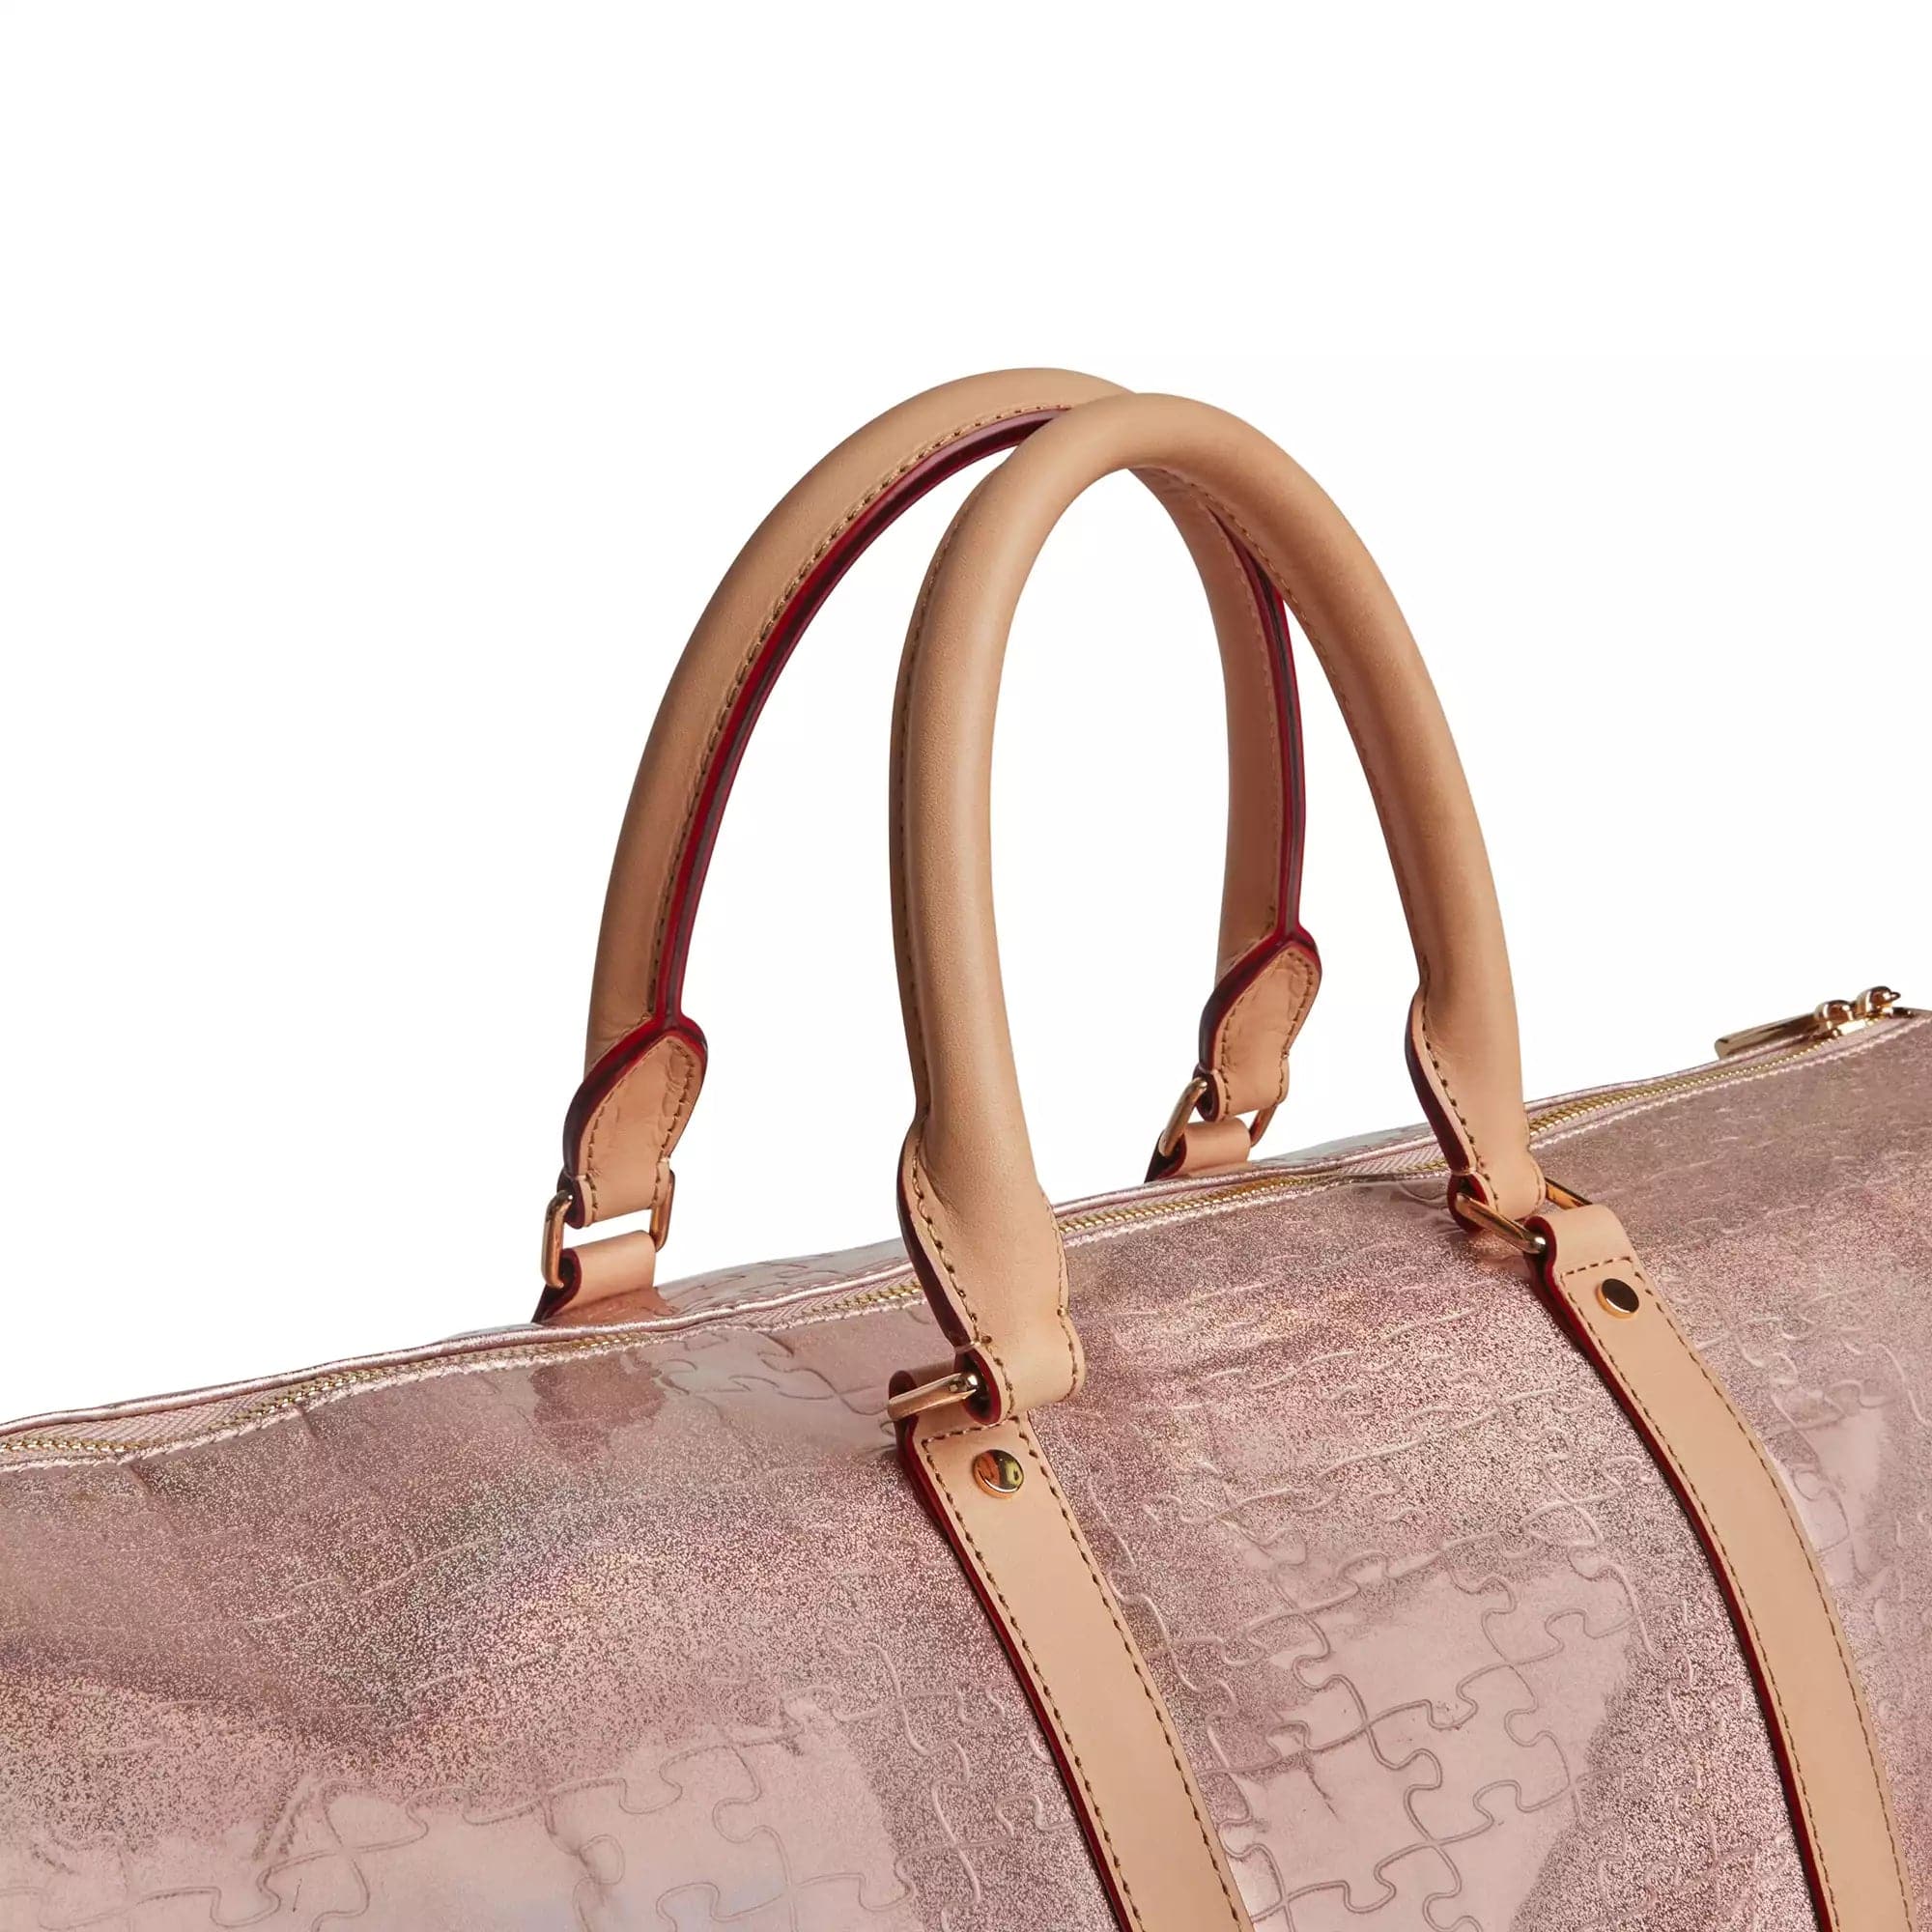 Abimbola Duffle Bag - Pink Glitter Large